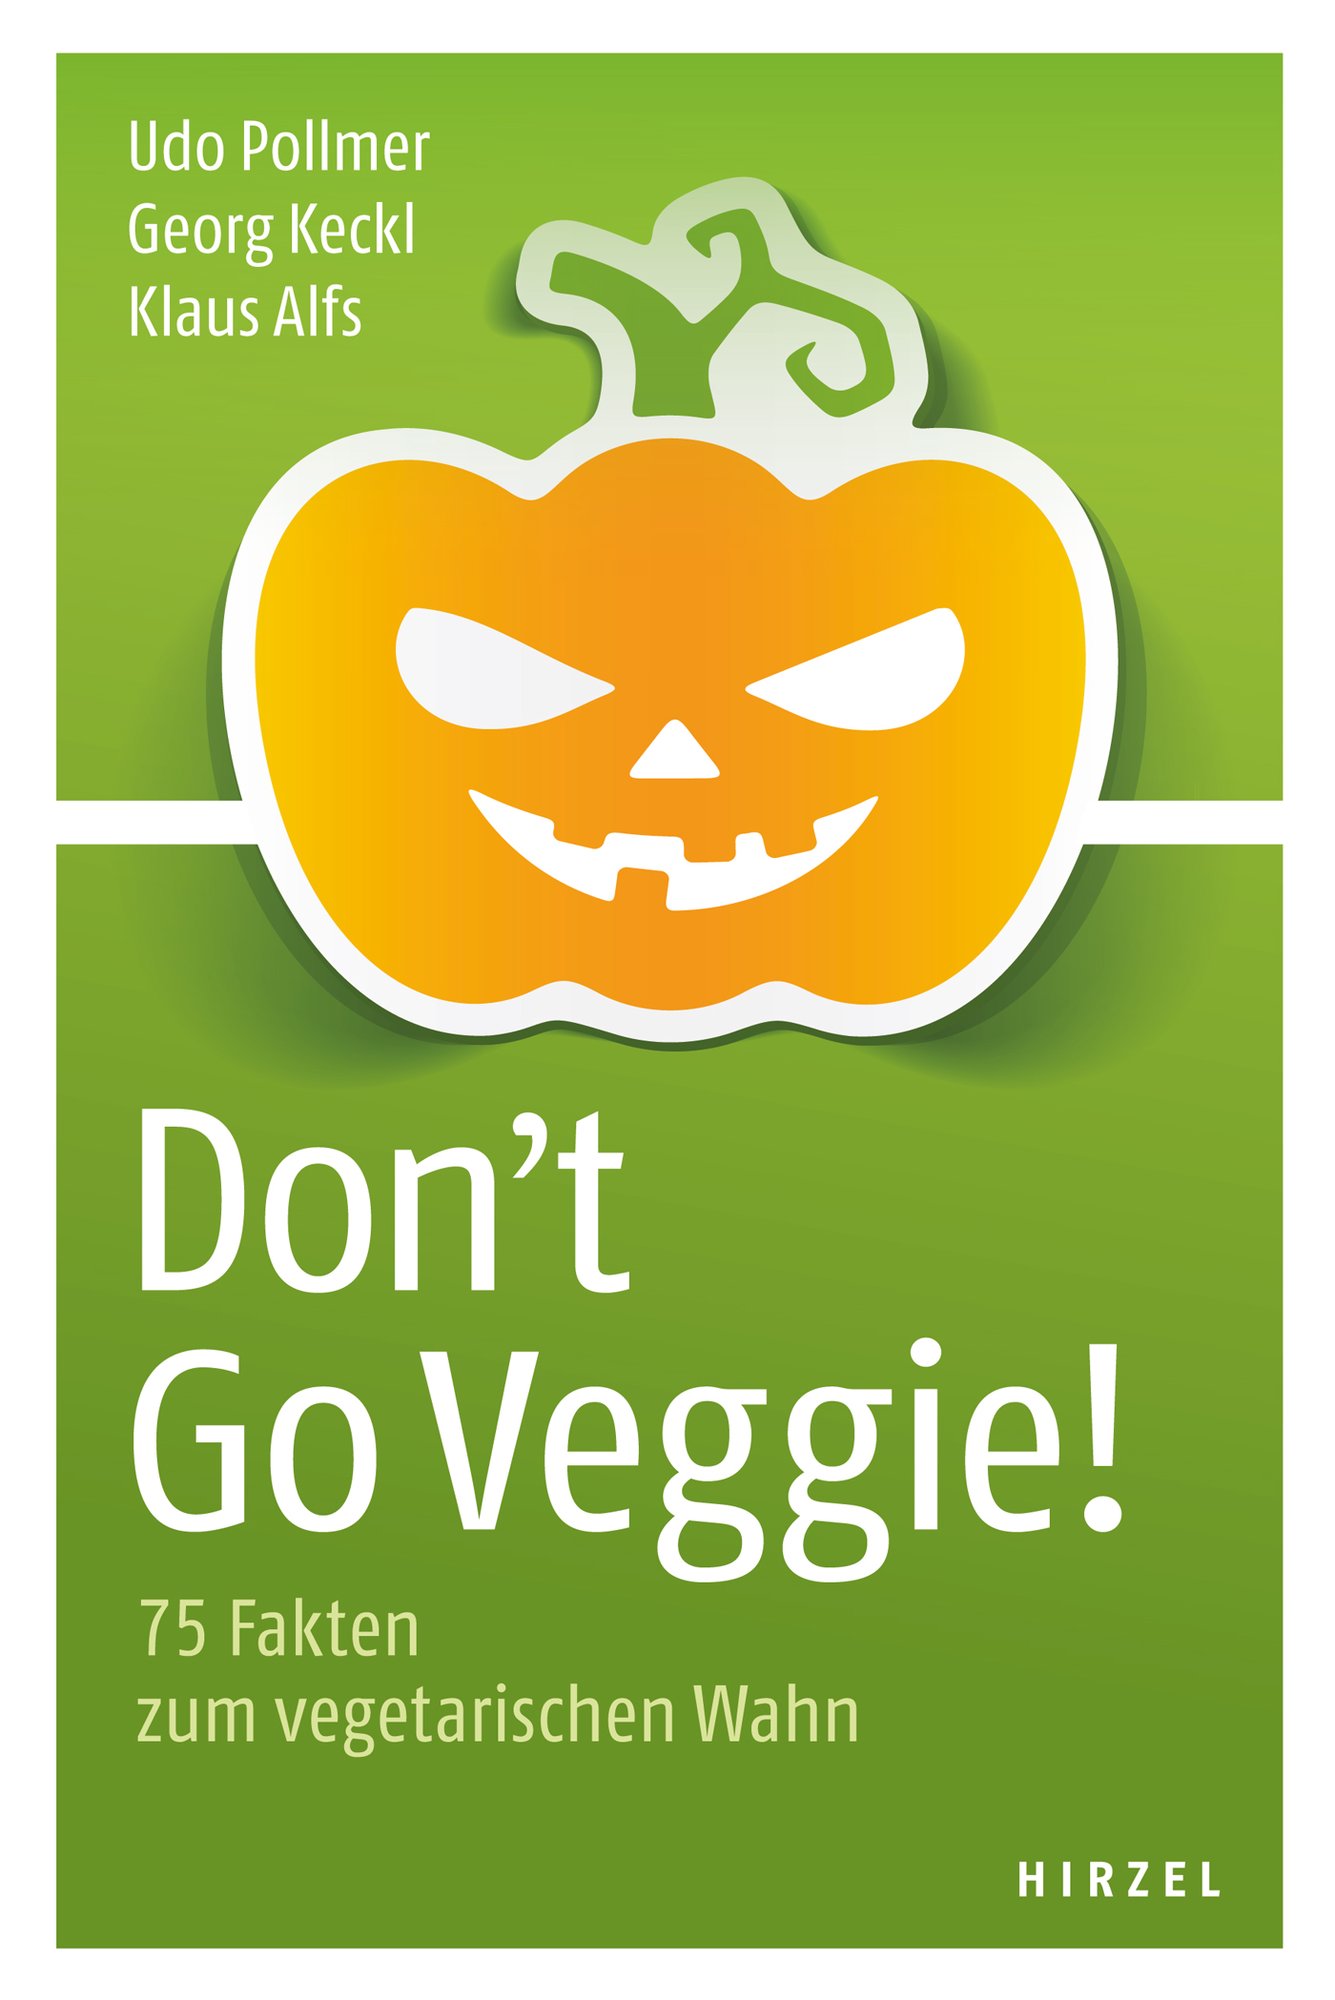 Don't Go Veggie!